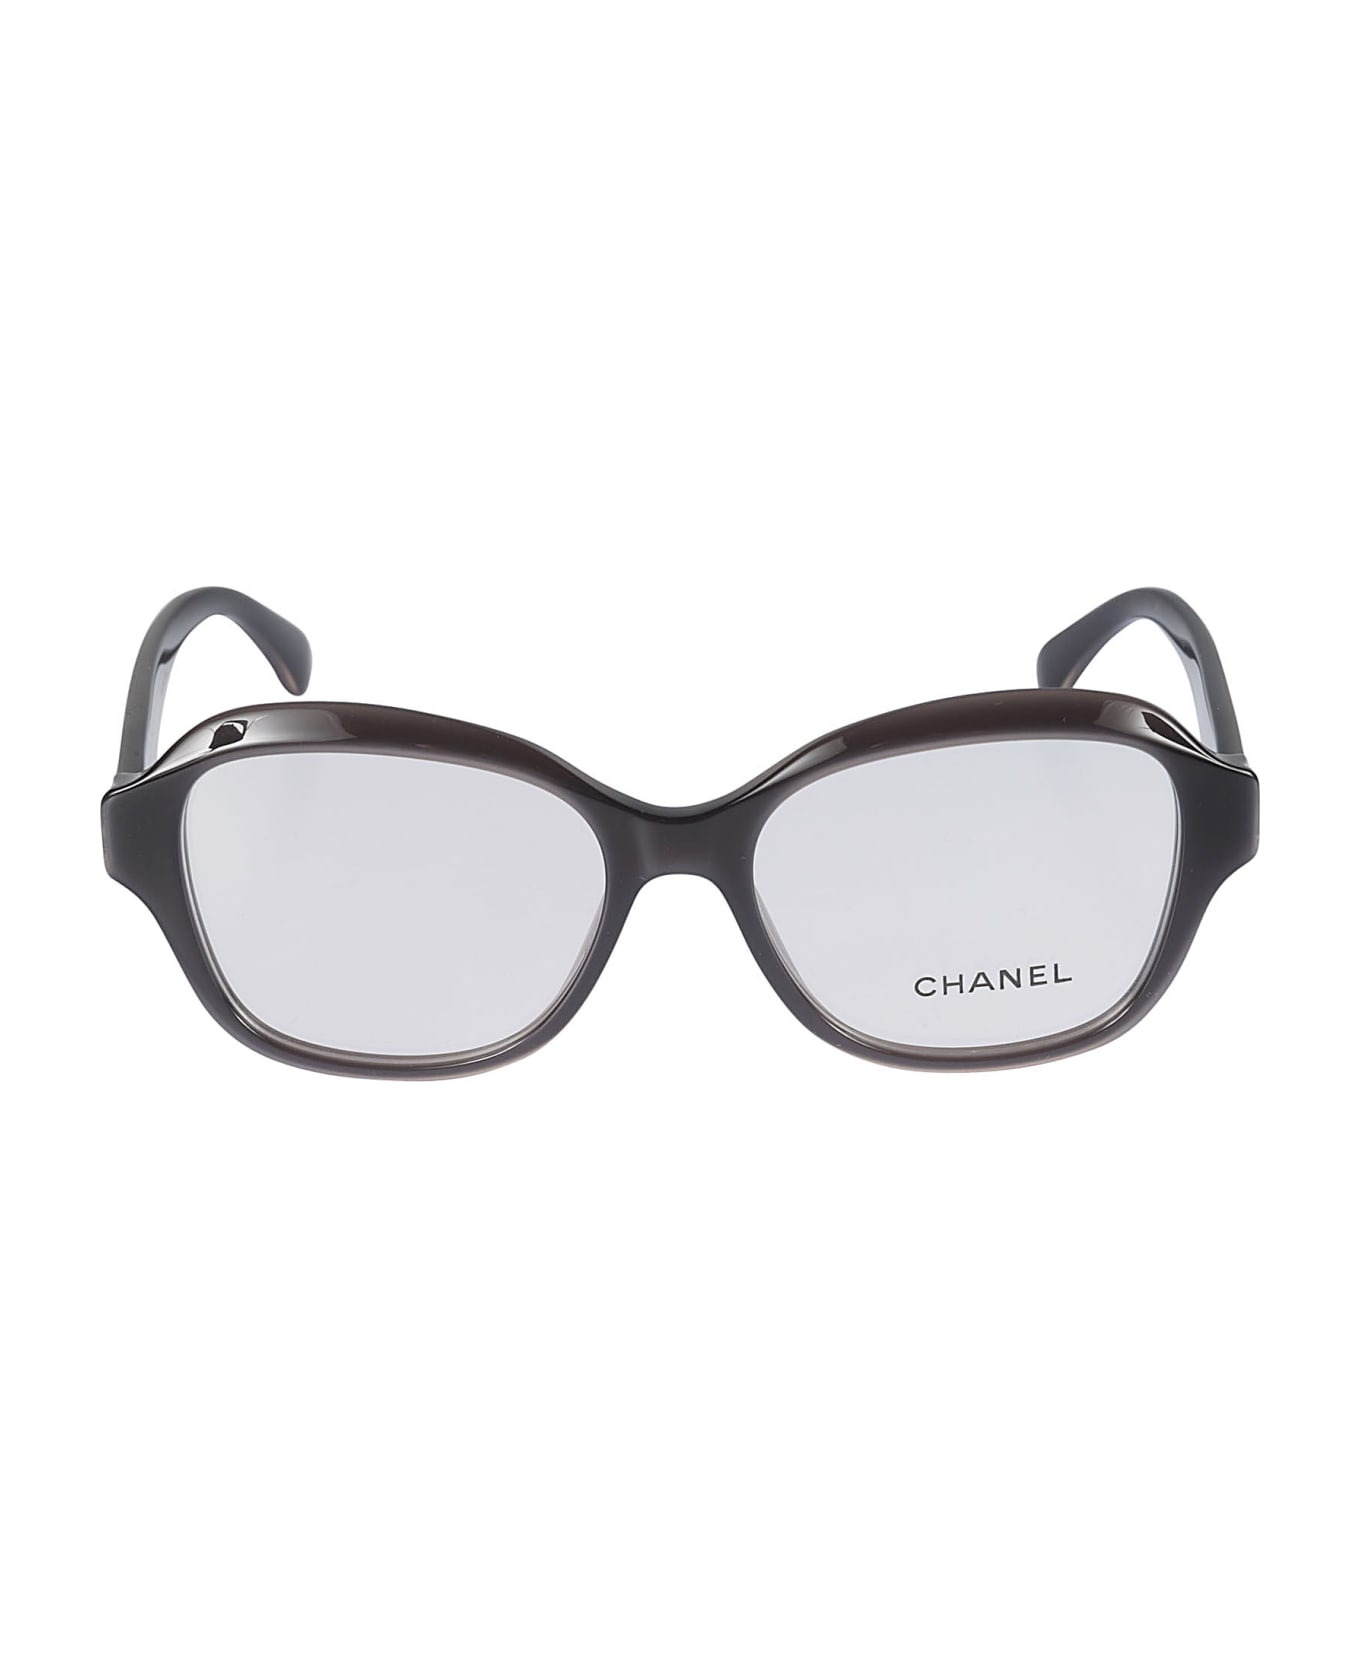 Chanel Square Glasses - 1716 アイウェア